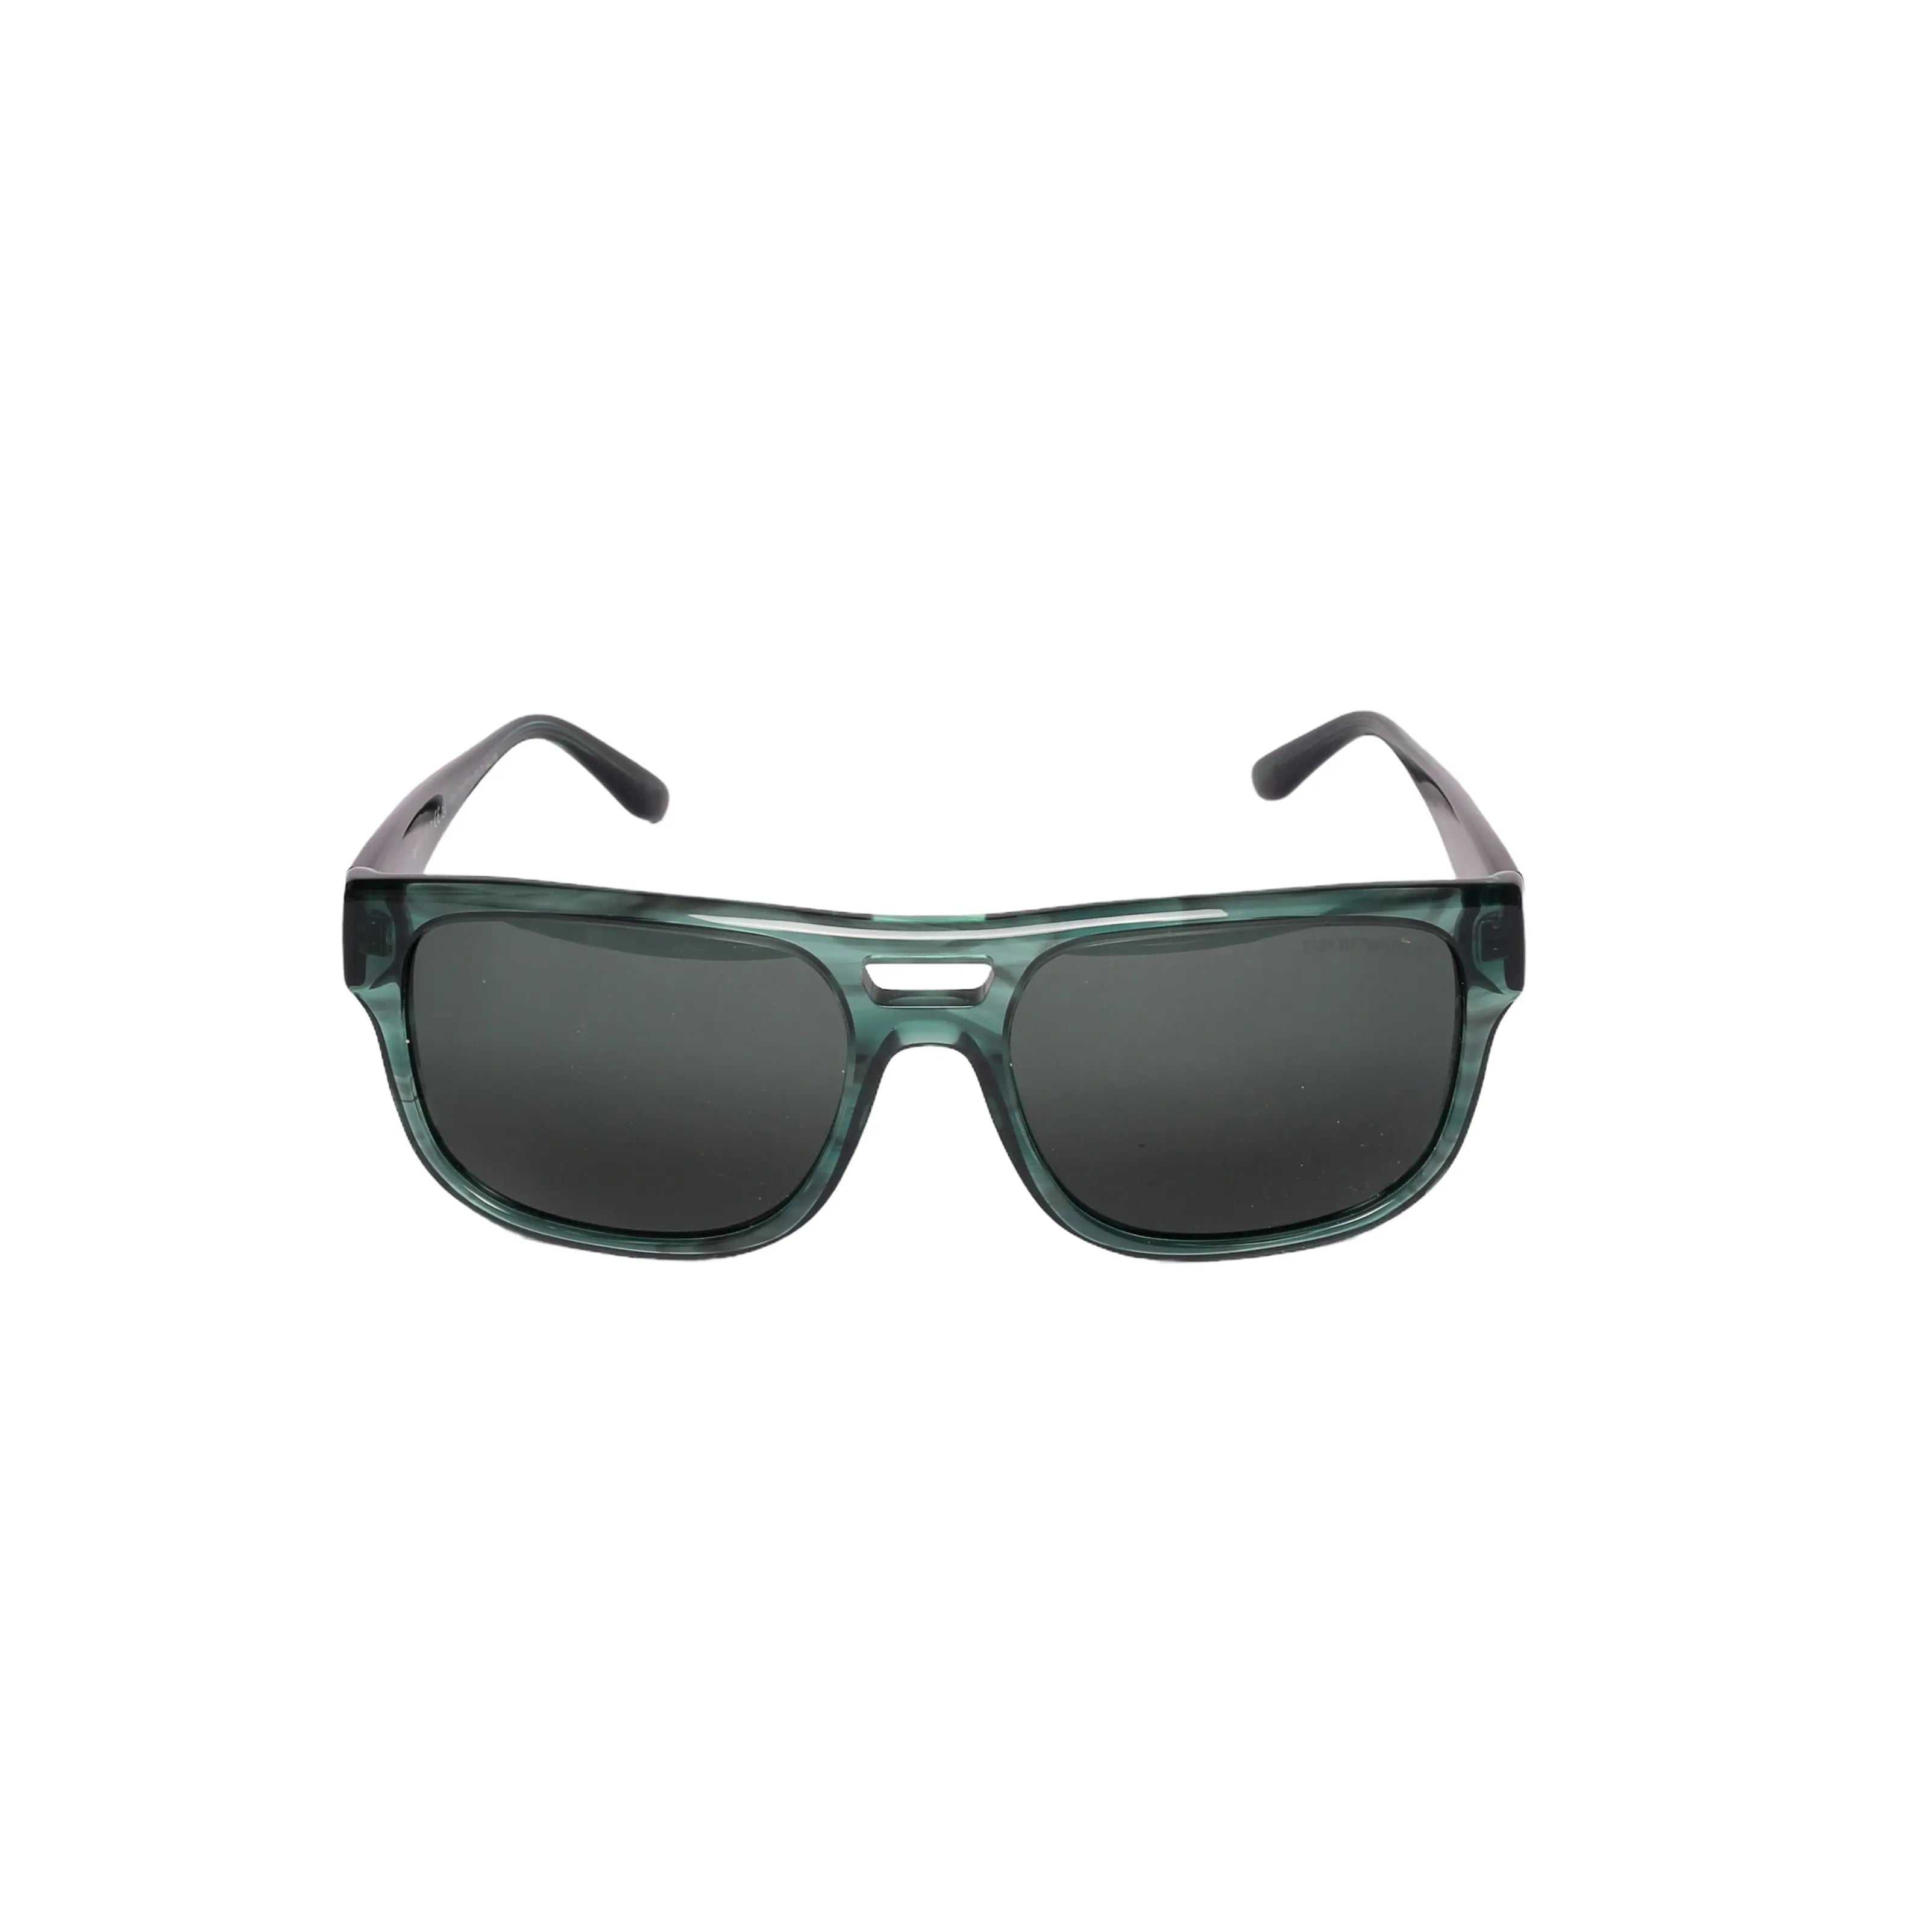 Emporio Armani-EA 4197-57-5168 Sunglasses - Premium Sunglasses from Emporio Armani - Just Rs. 11890! Shop now at Laxmi Opticians